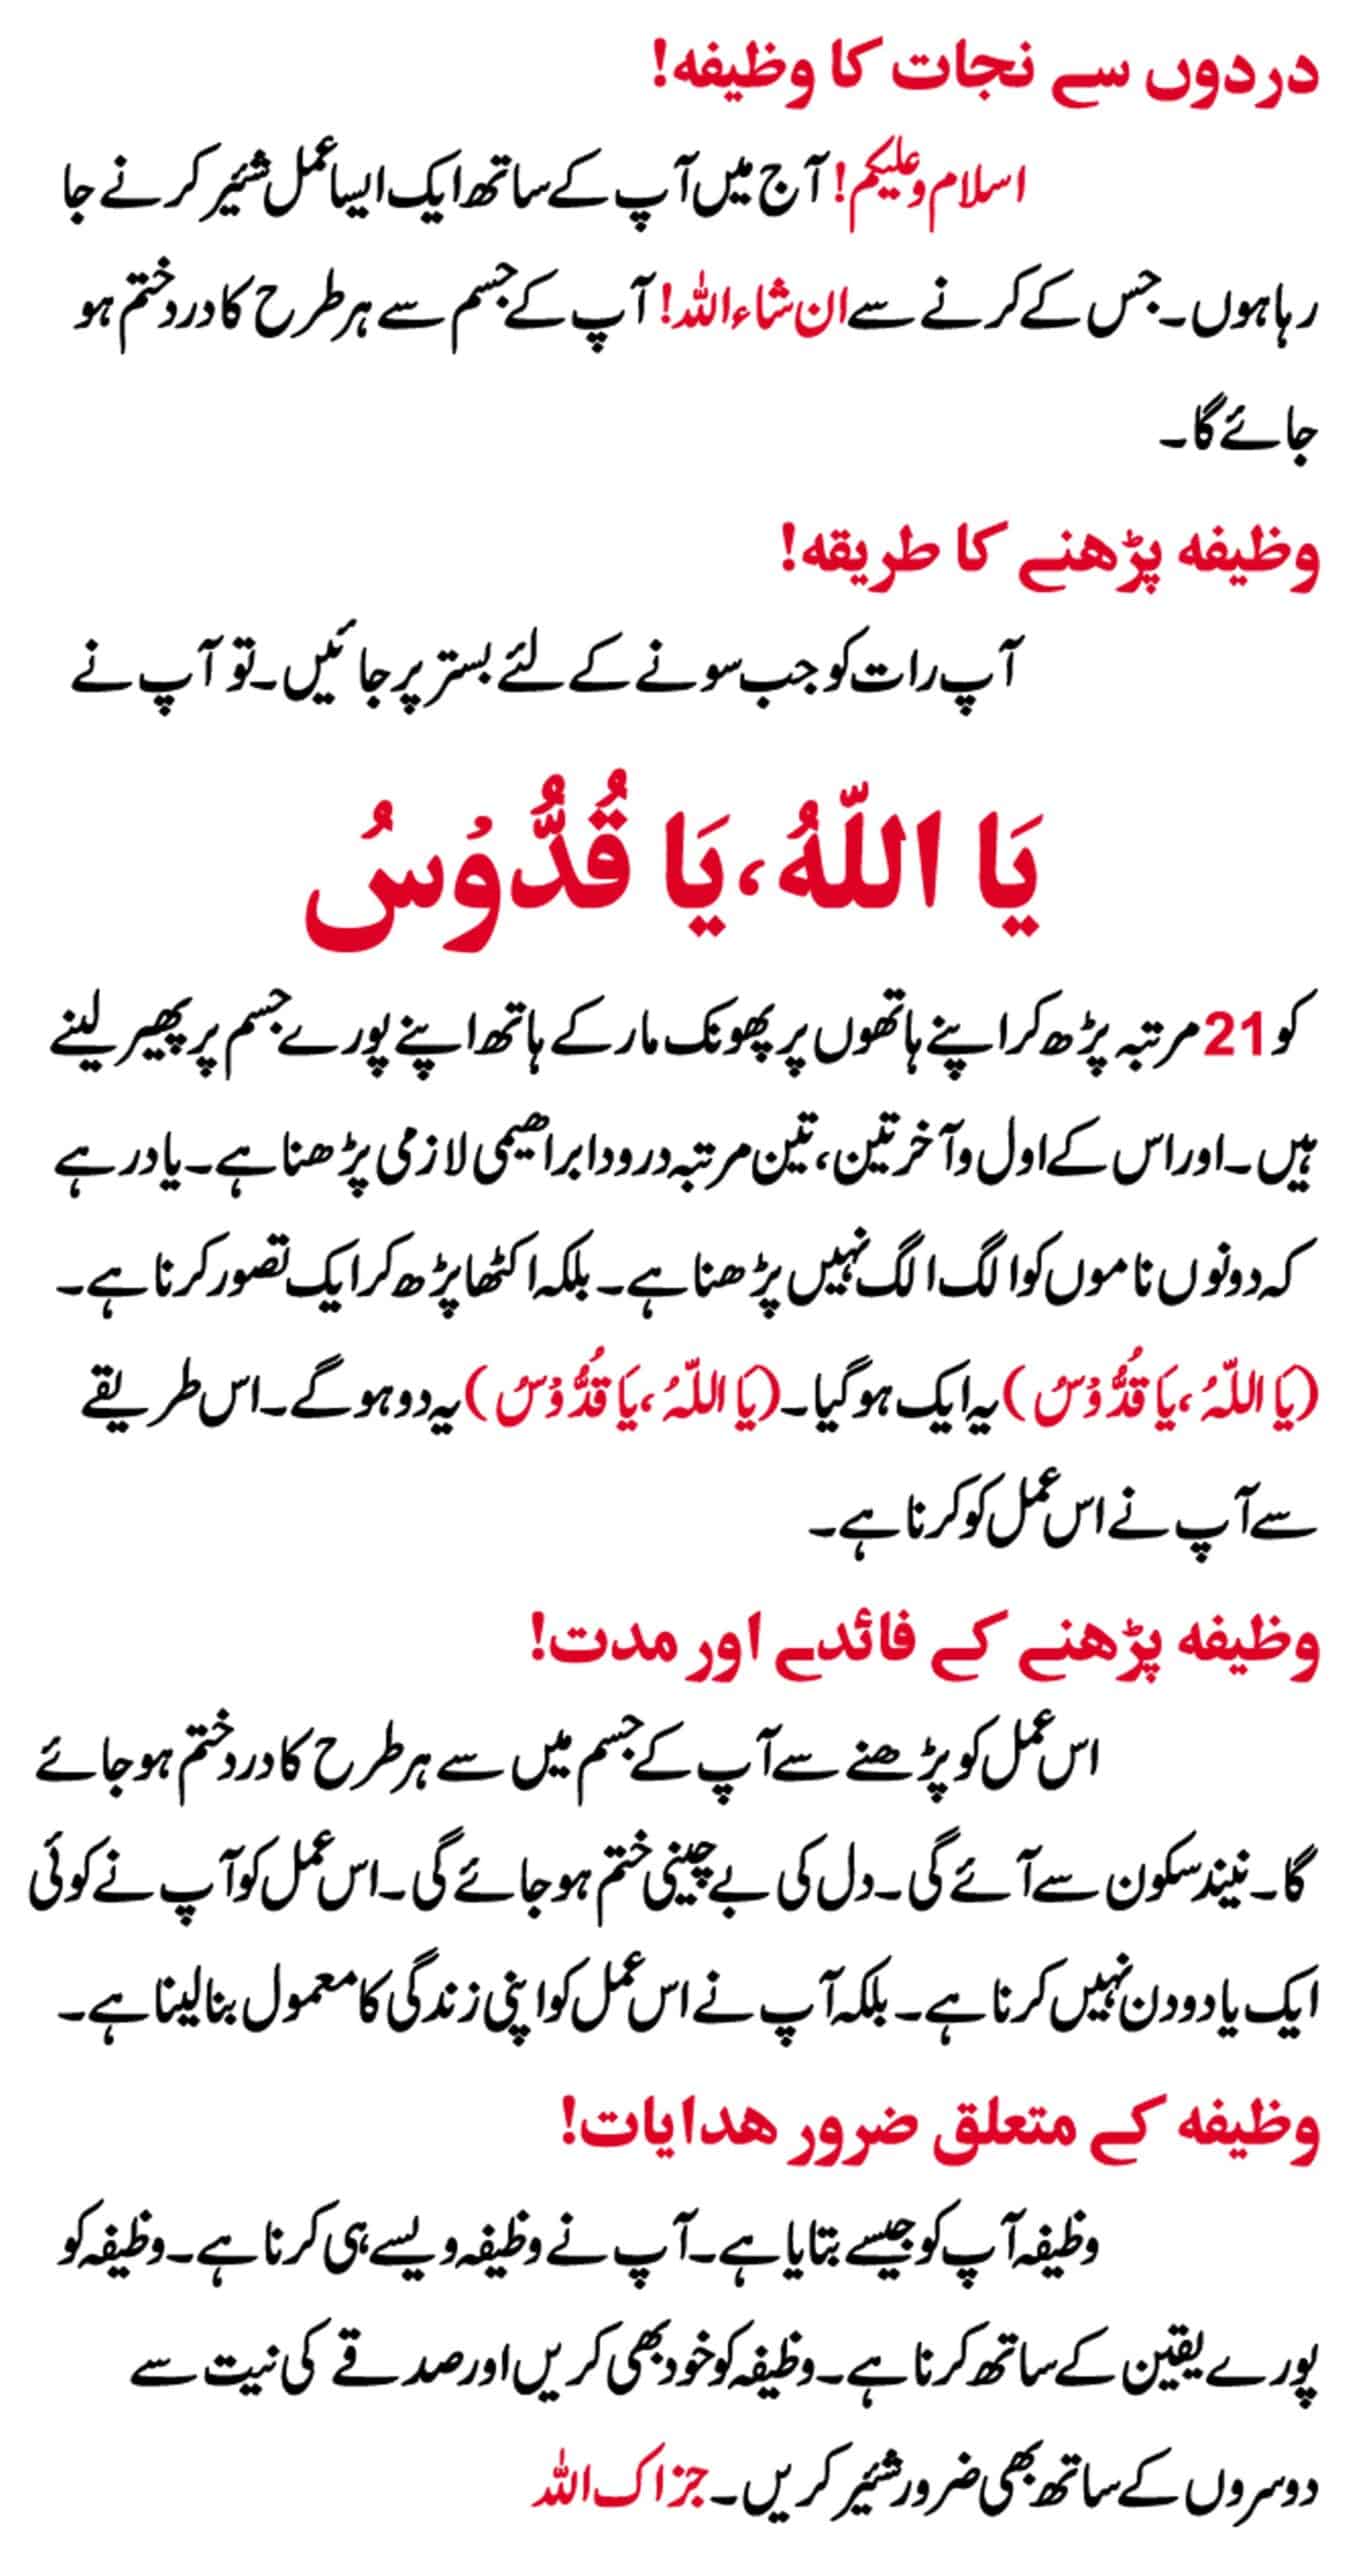 Qurani Wazifa for Pain | Ya Allah Ho Ya Quddus ki Fazilat